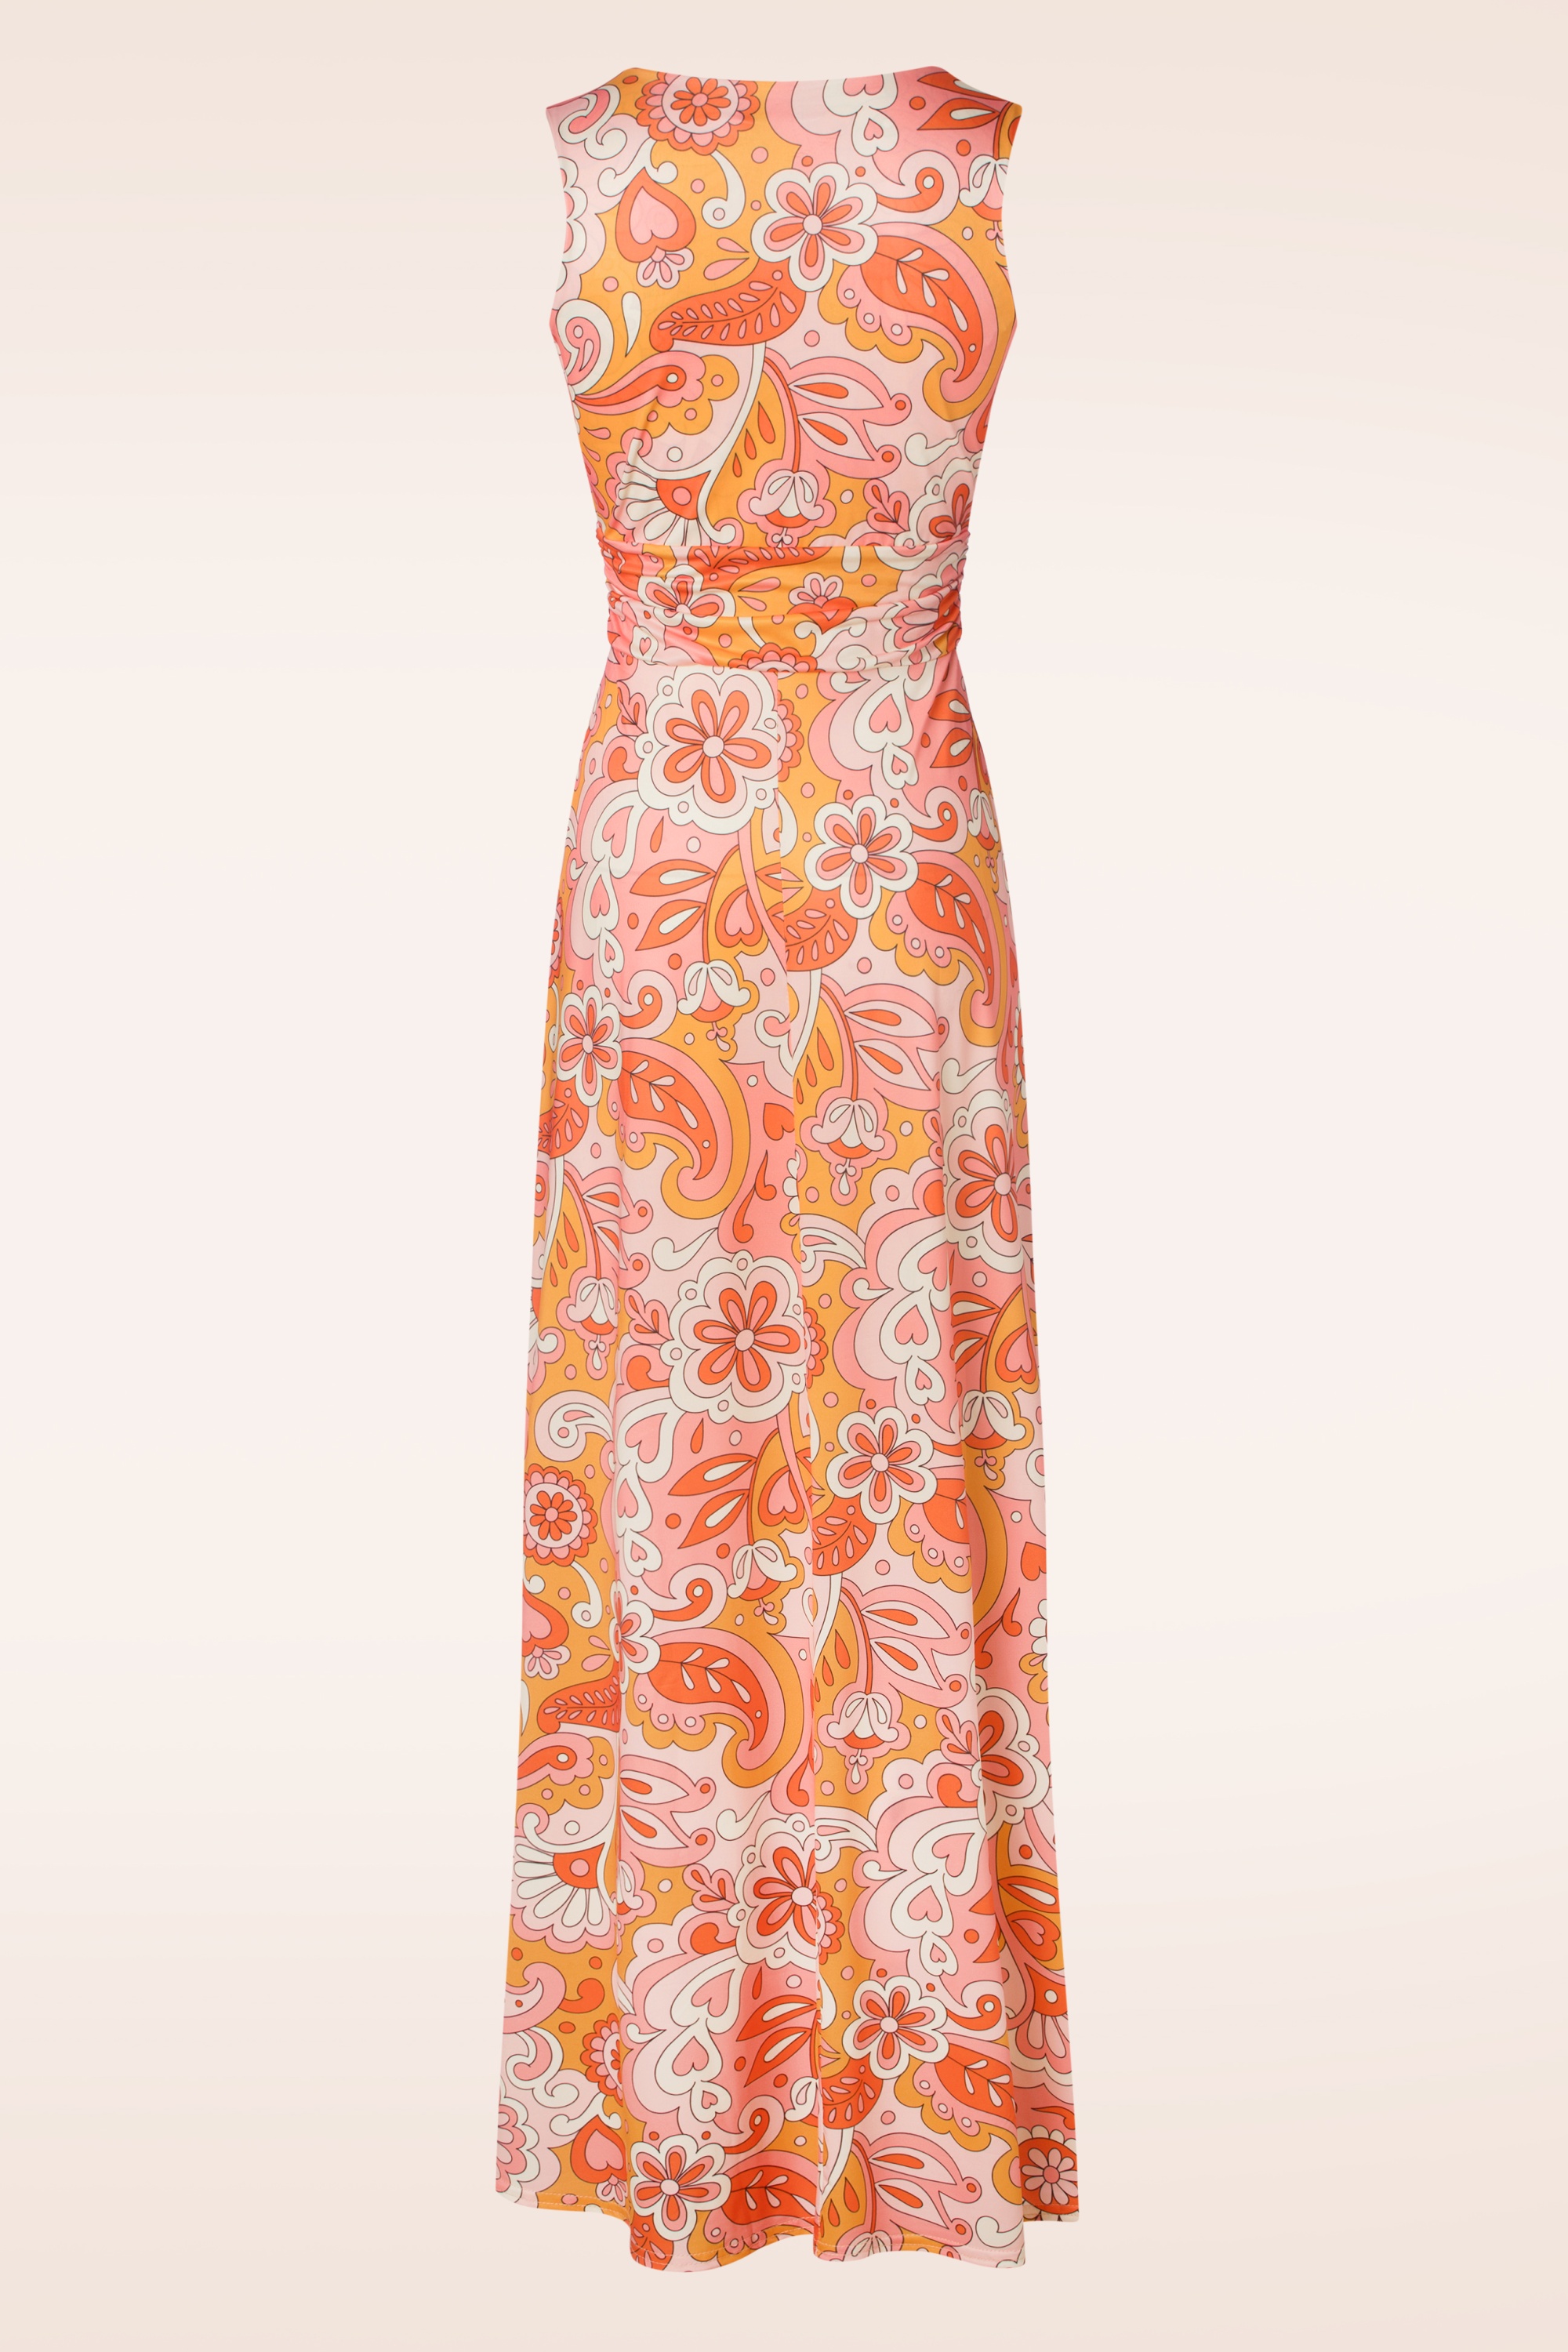 Vintage Chic for Topvintage - Gabriela maxi jurk in oranje en roze 2